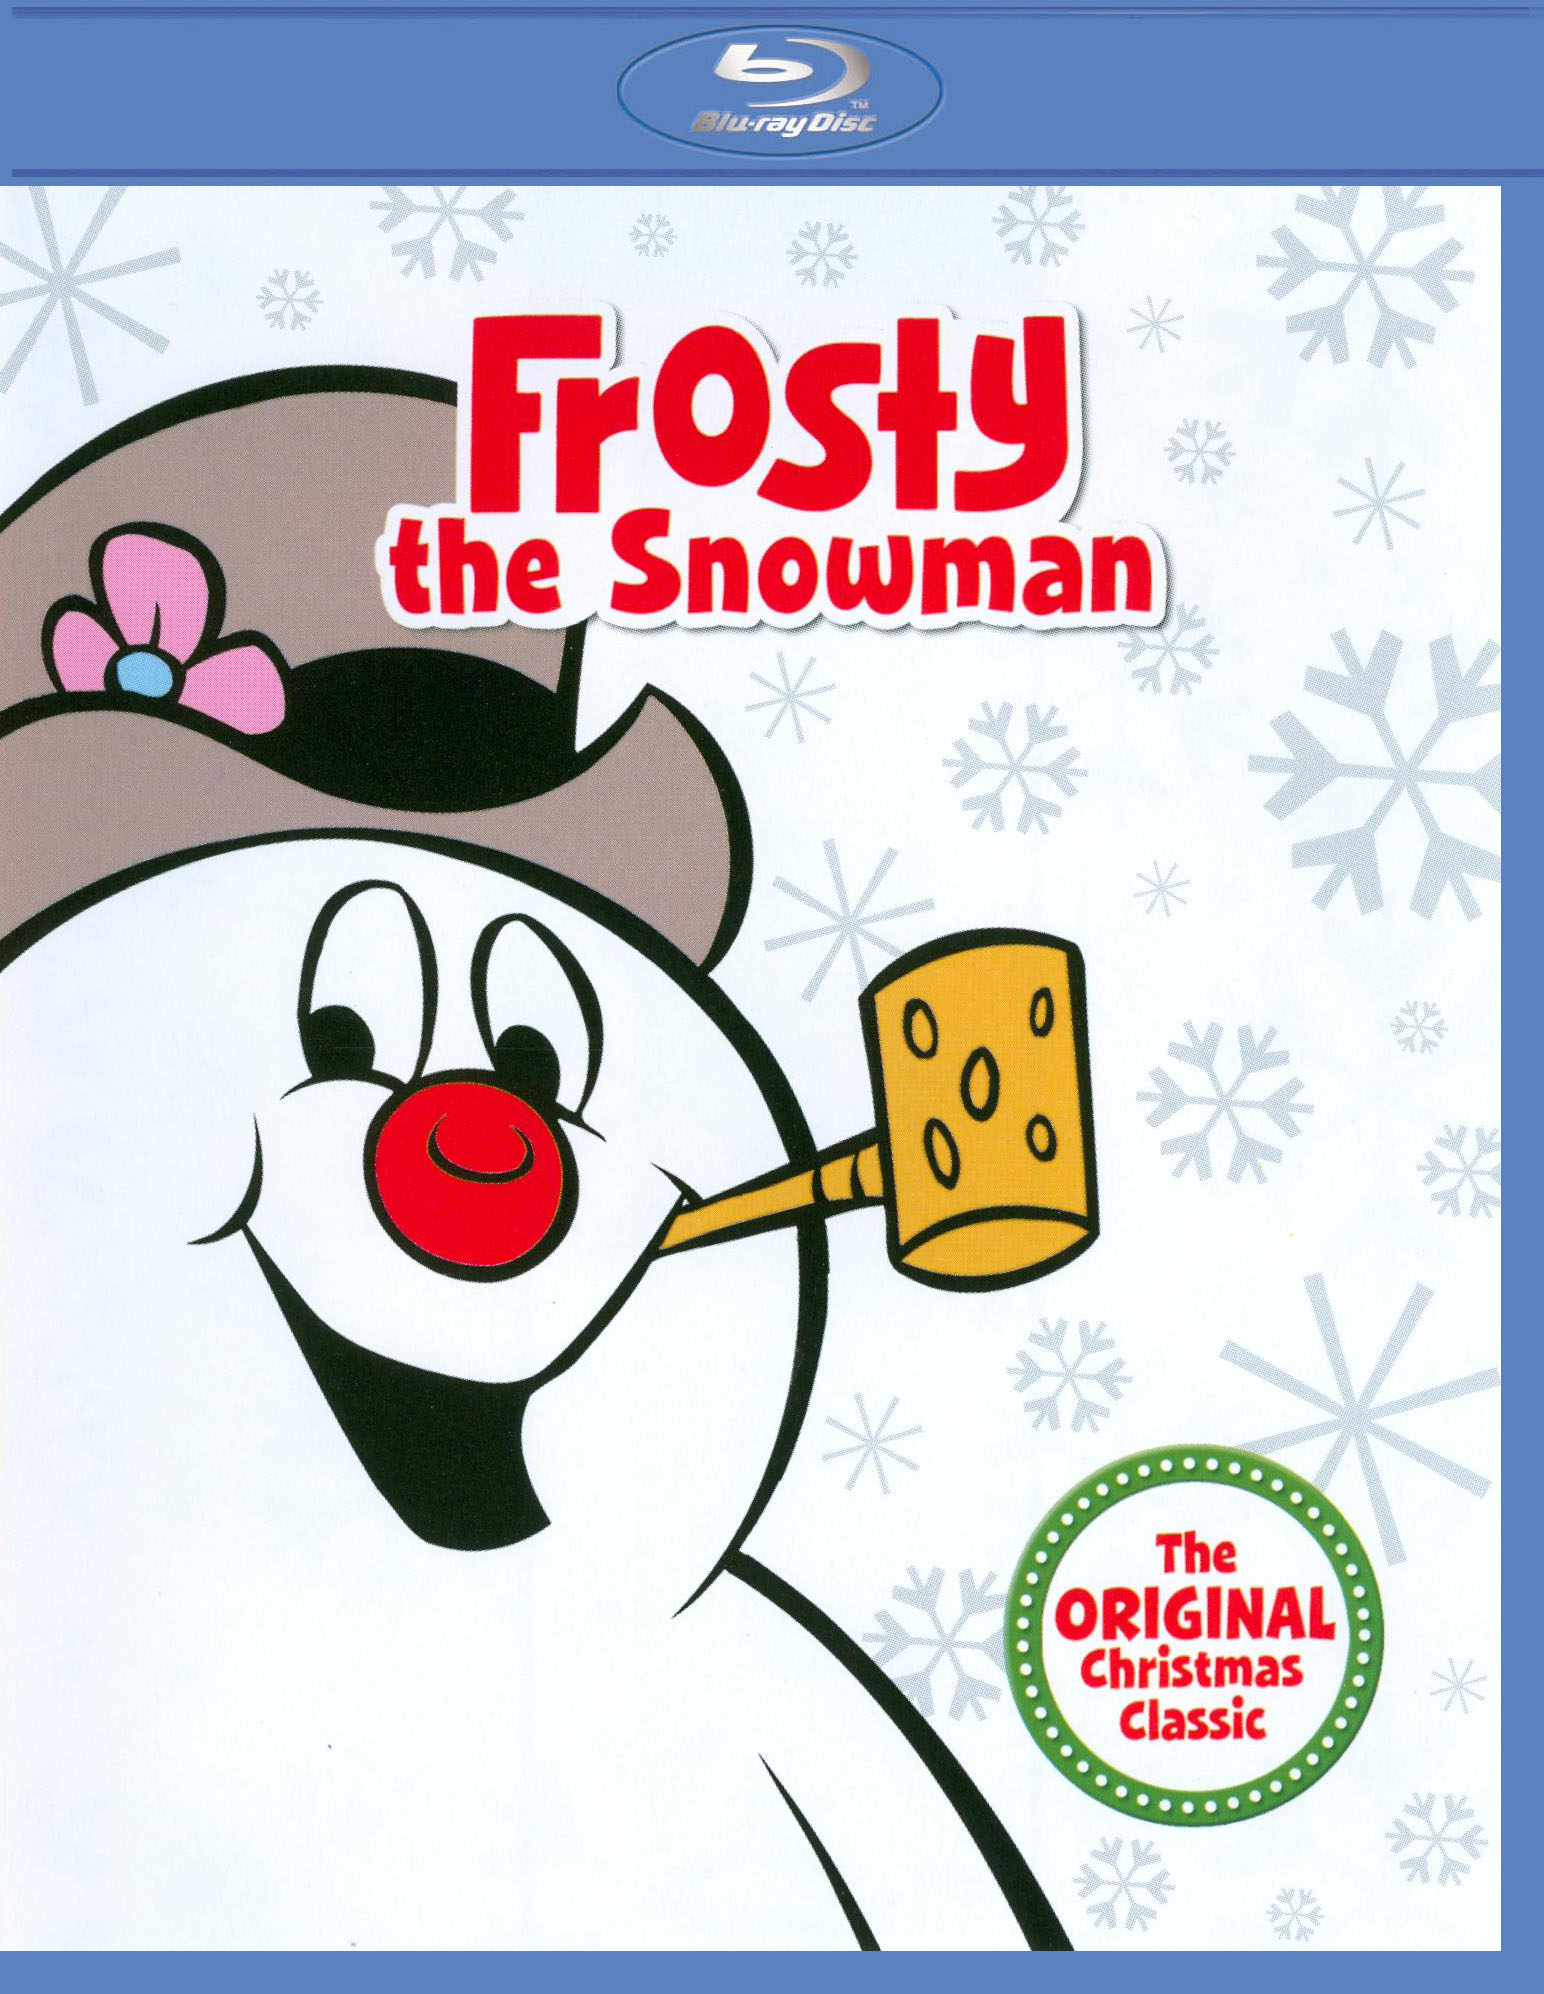 frosty the snowman saying happy birthday